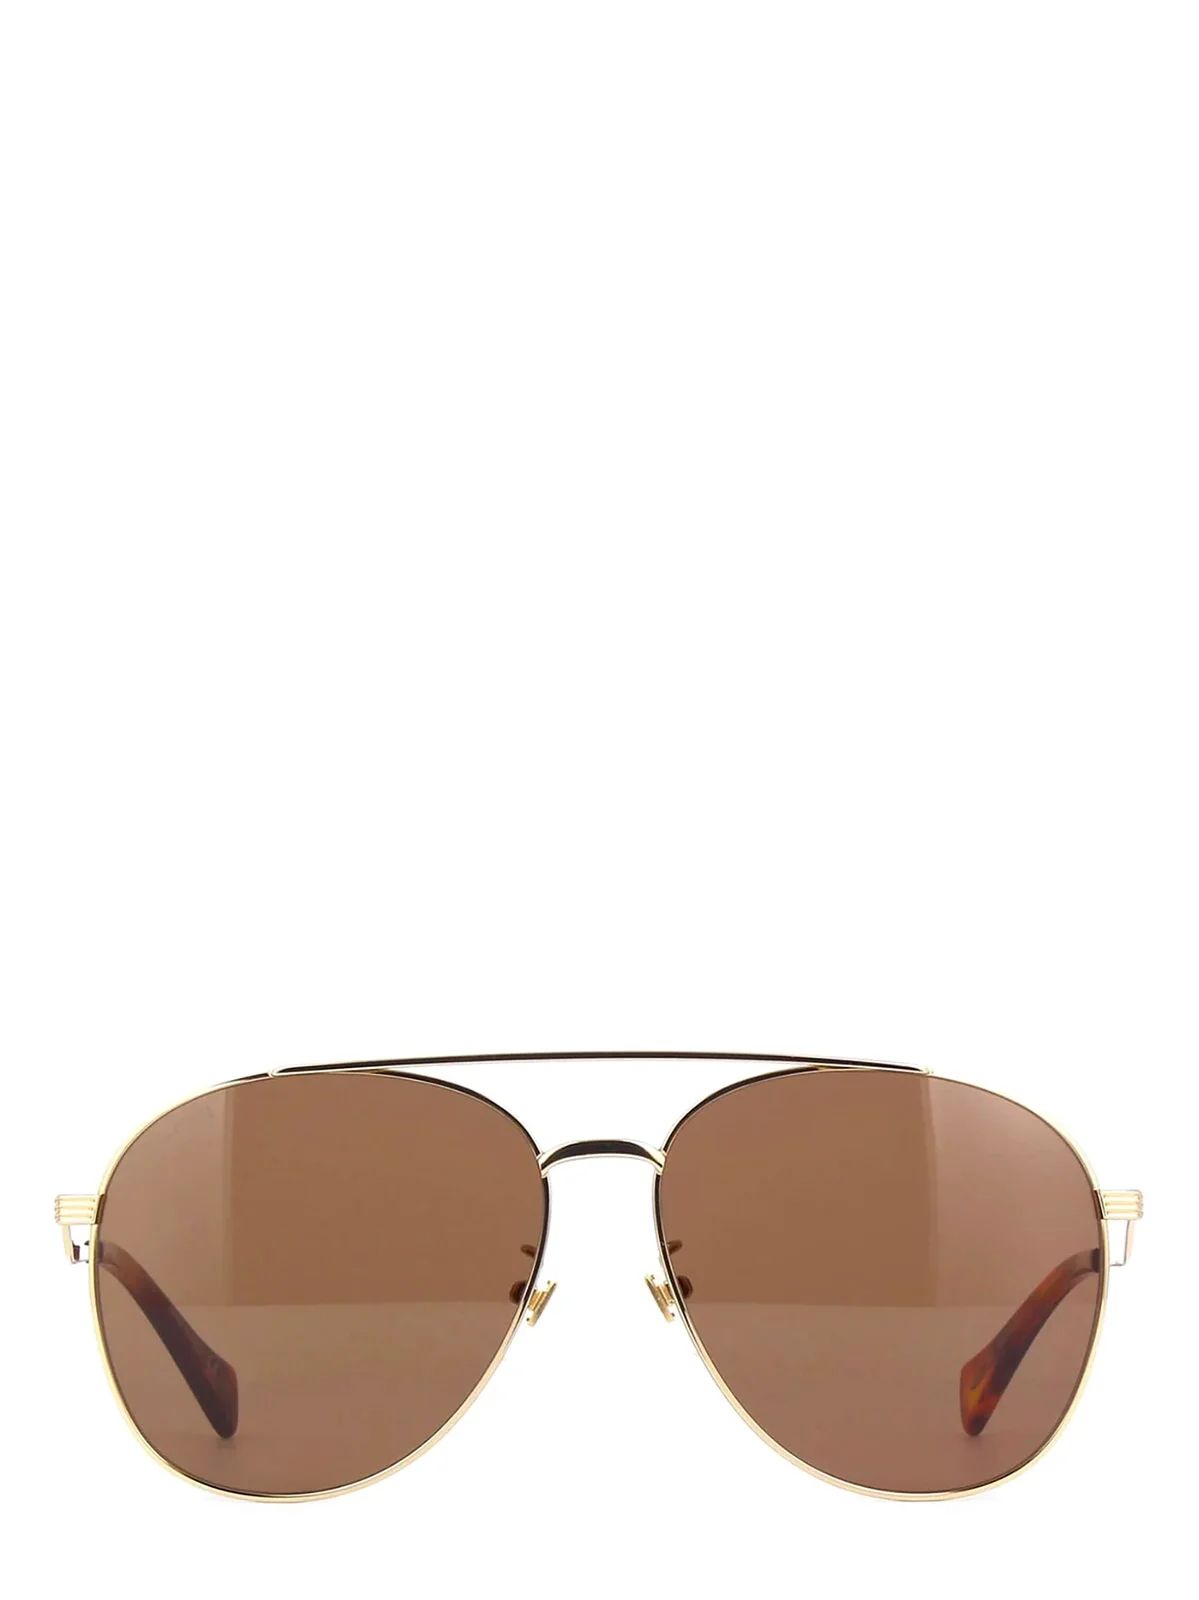 Gucci Eyewear Aviator Frame Sunglasses | Cettire Global